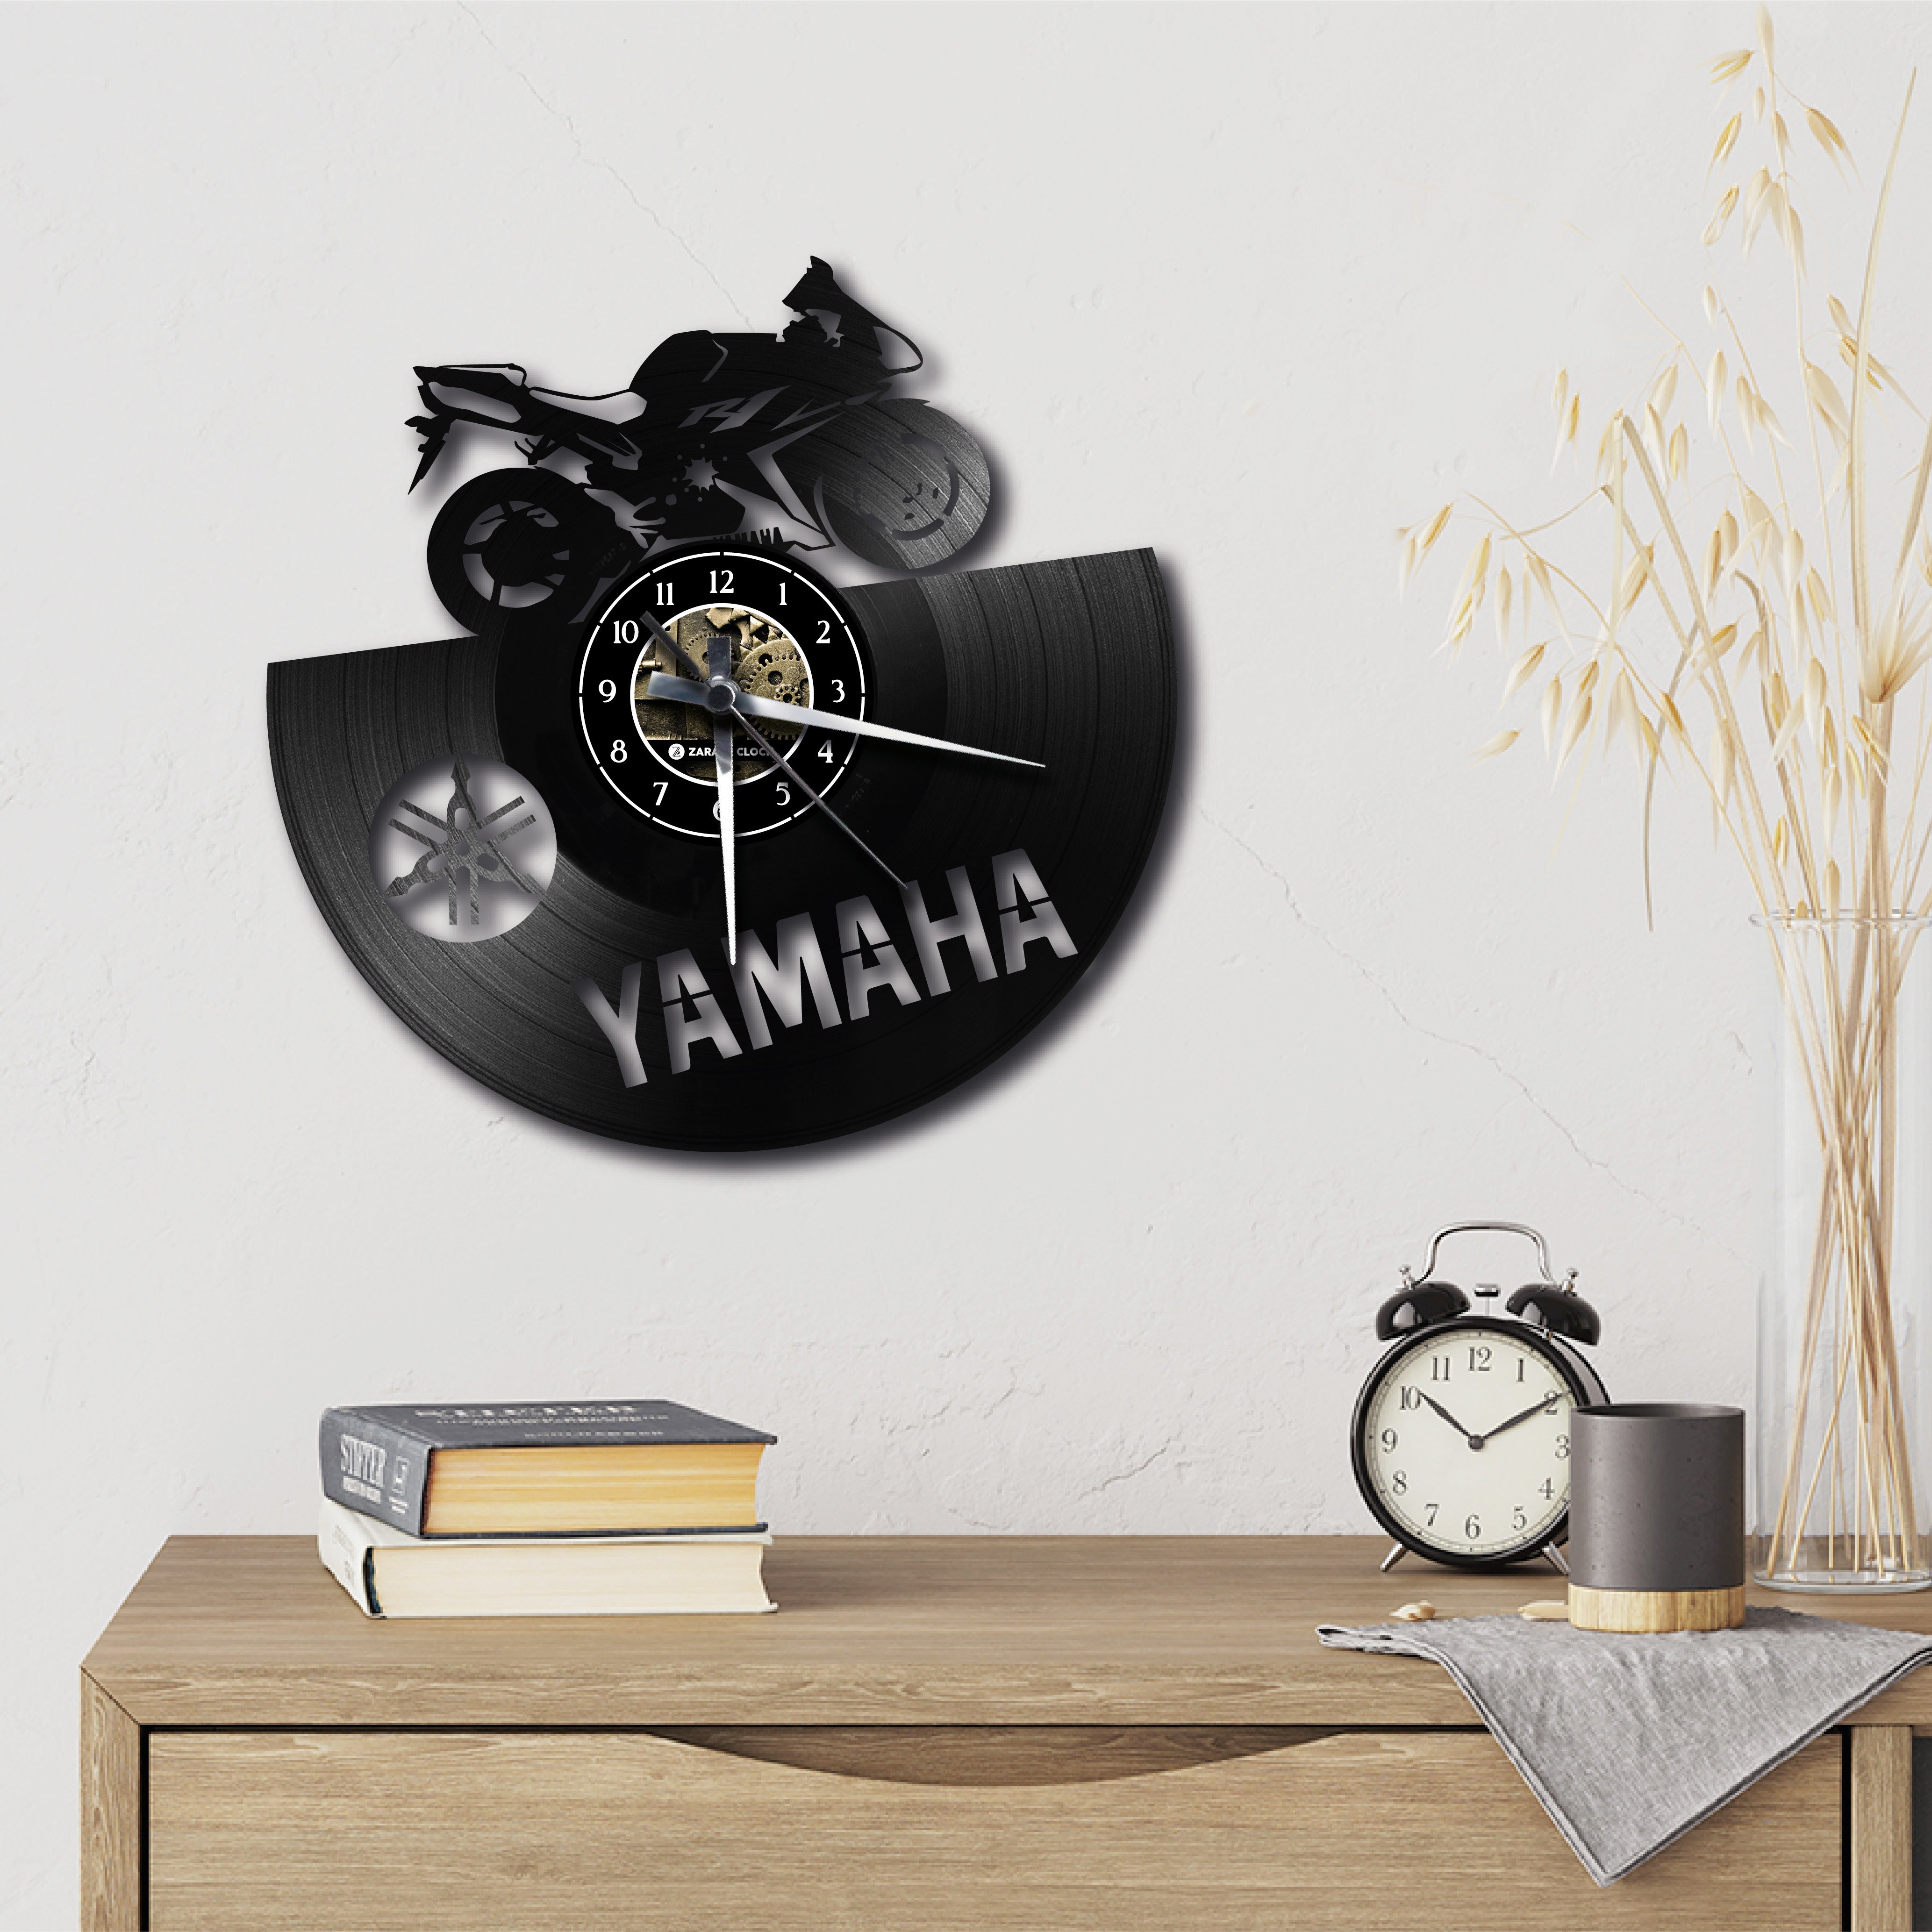 YAMAHA ✦ orologio in vinile